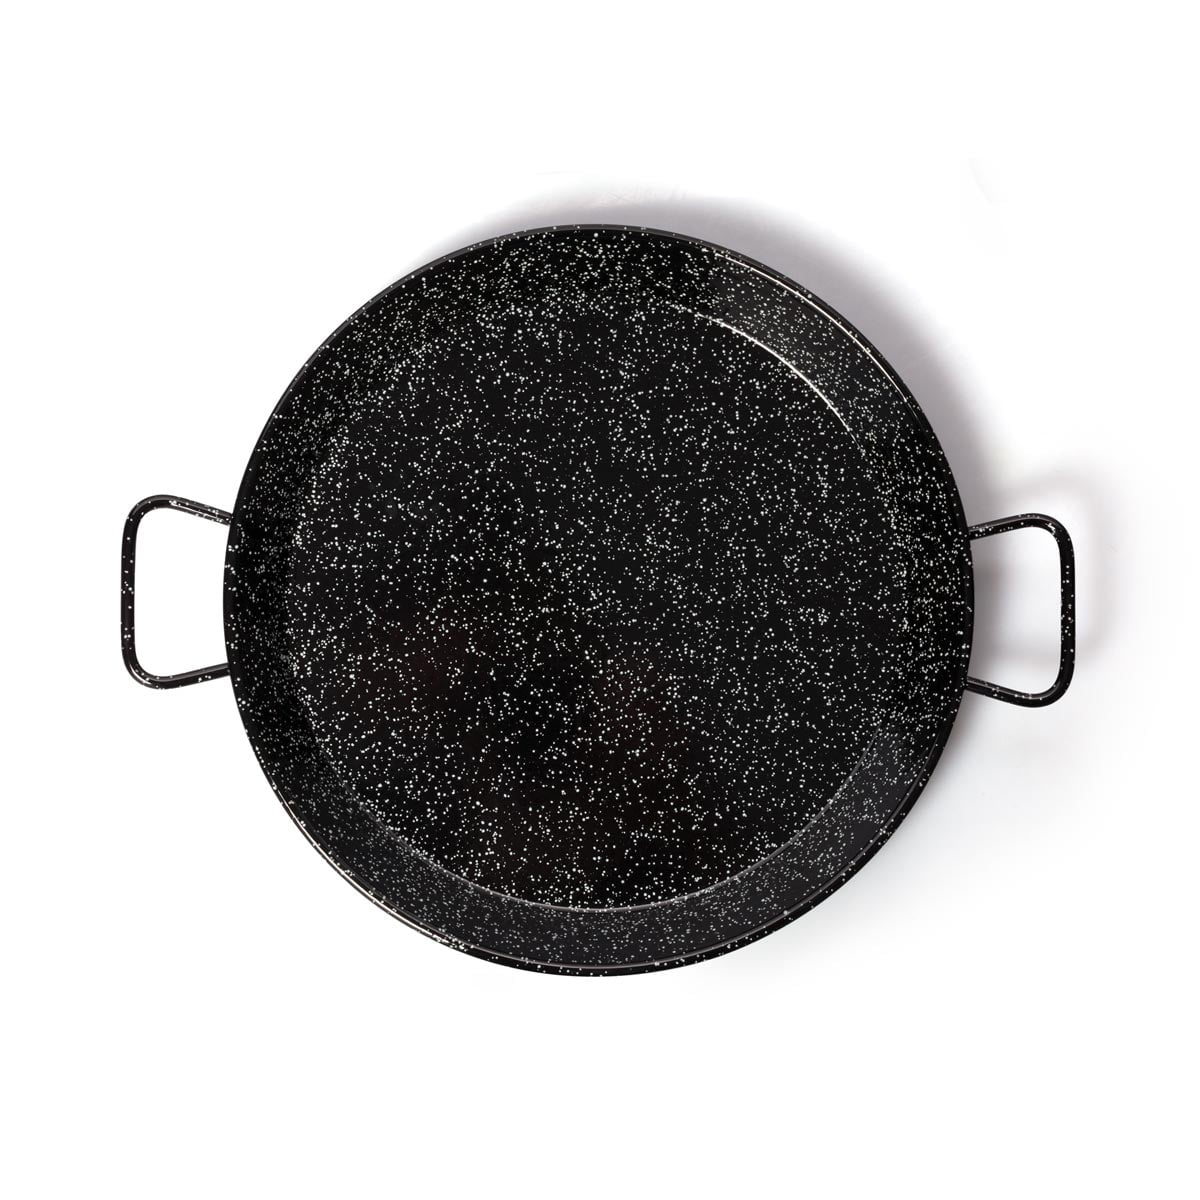 Matfer Bourgeat Black Carbon Steel Paella Pan, 14 1/8 — CulinaryCookware